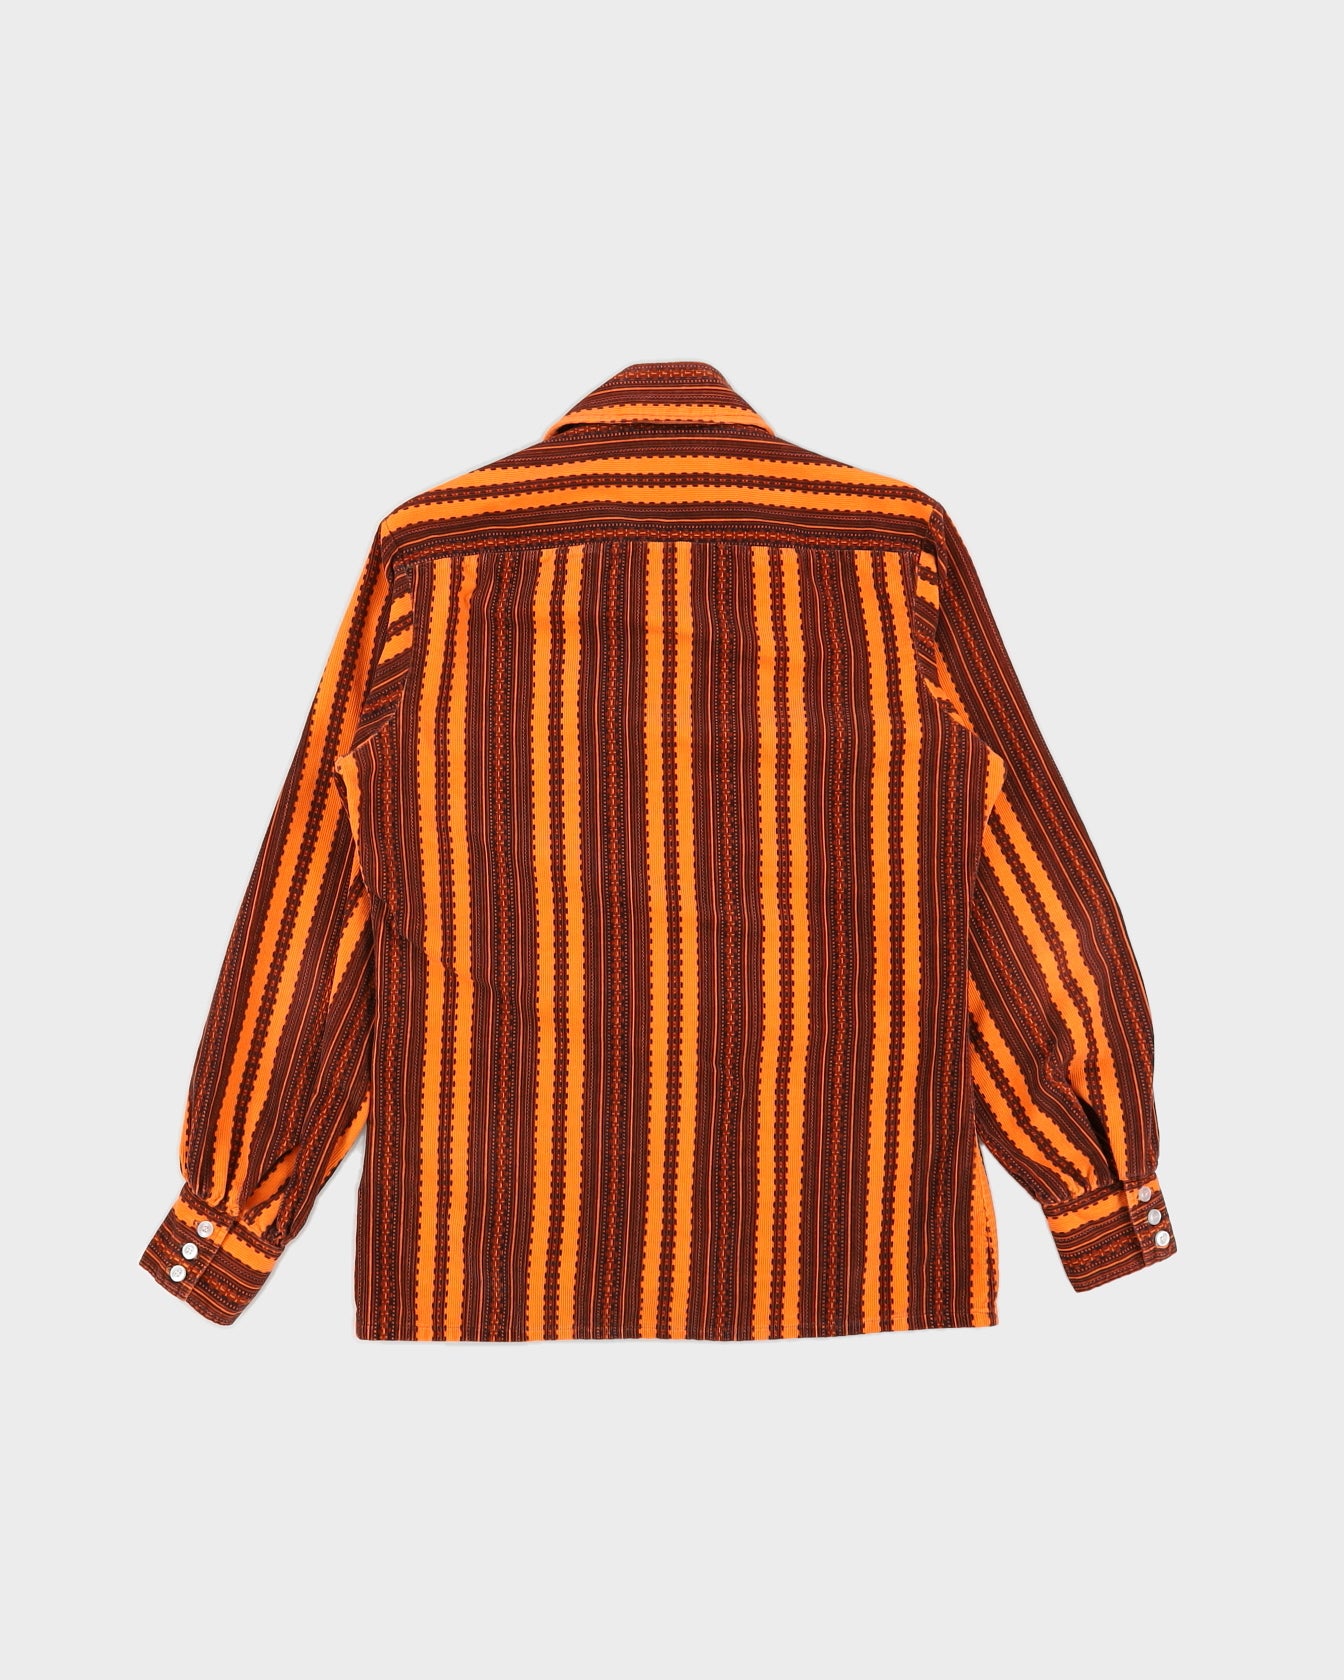 Vintage 70s Lory Cord Orange Long Sleeved Shirt - M